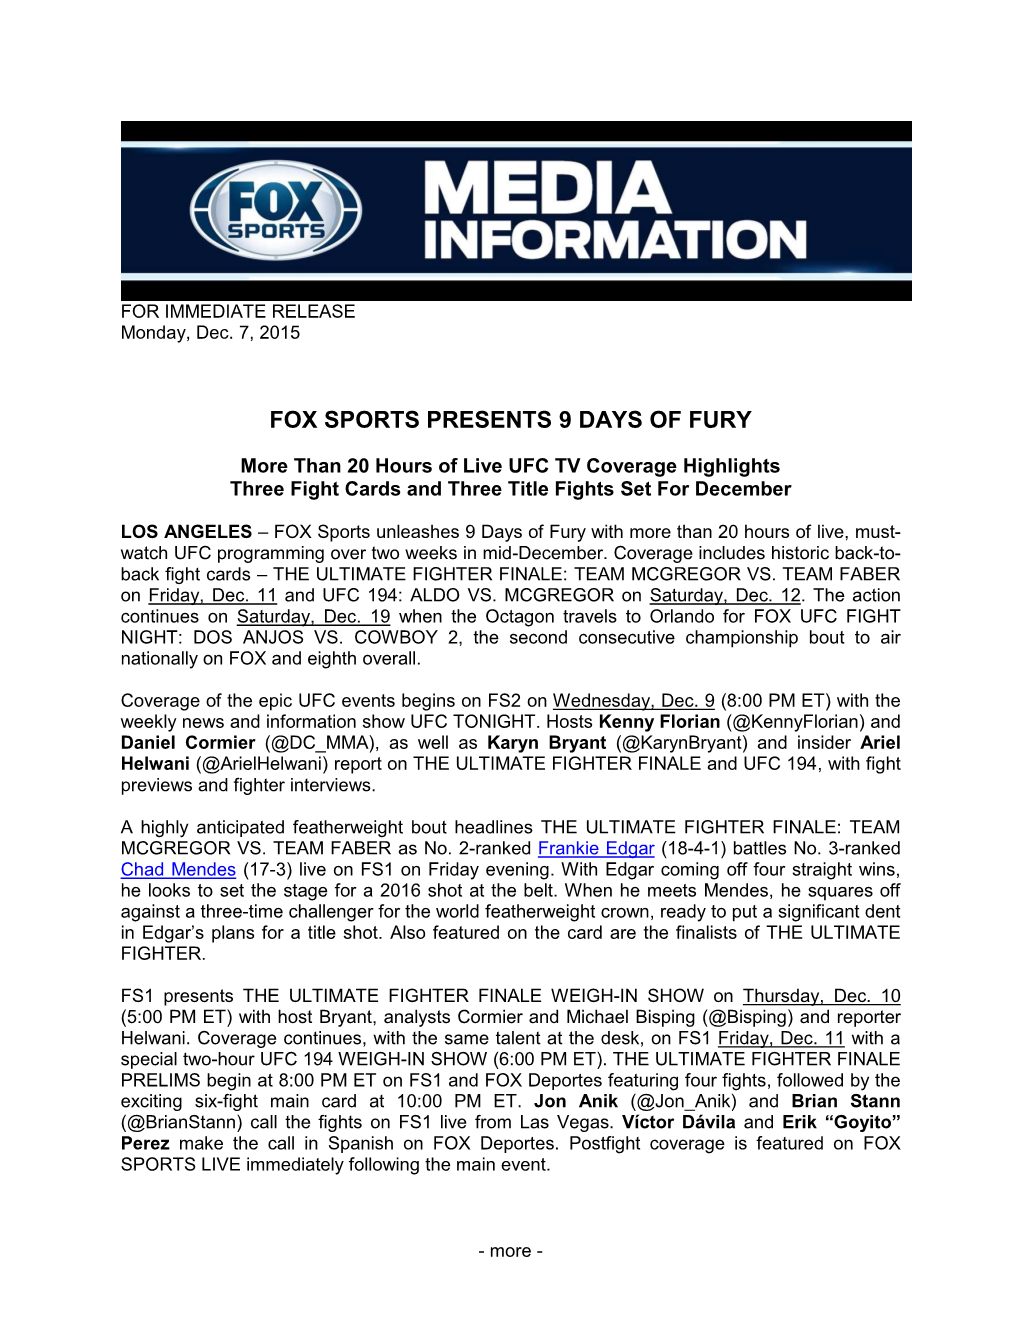 Fox Sports Presents 9 Days of Fury